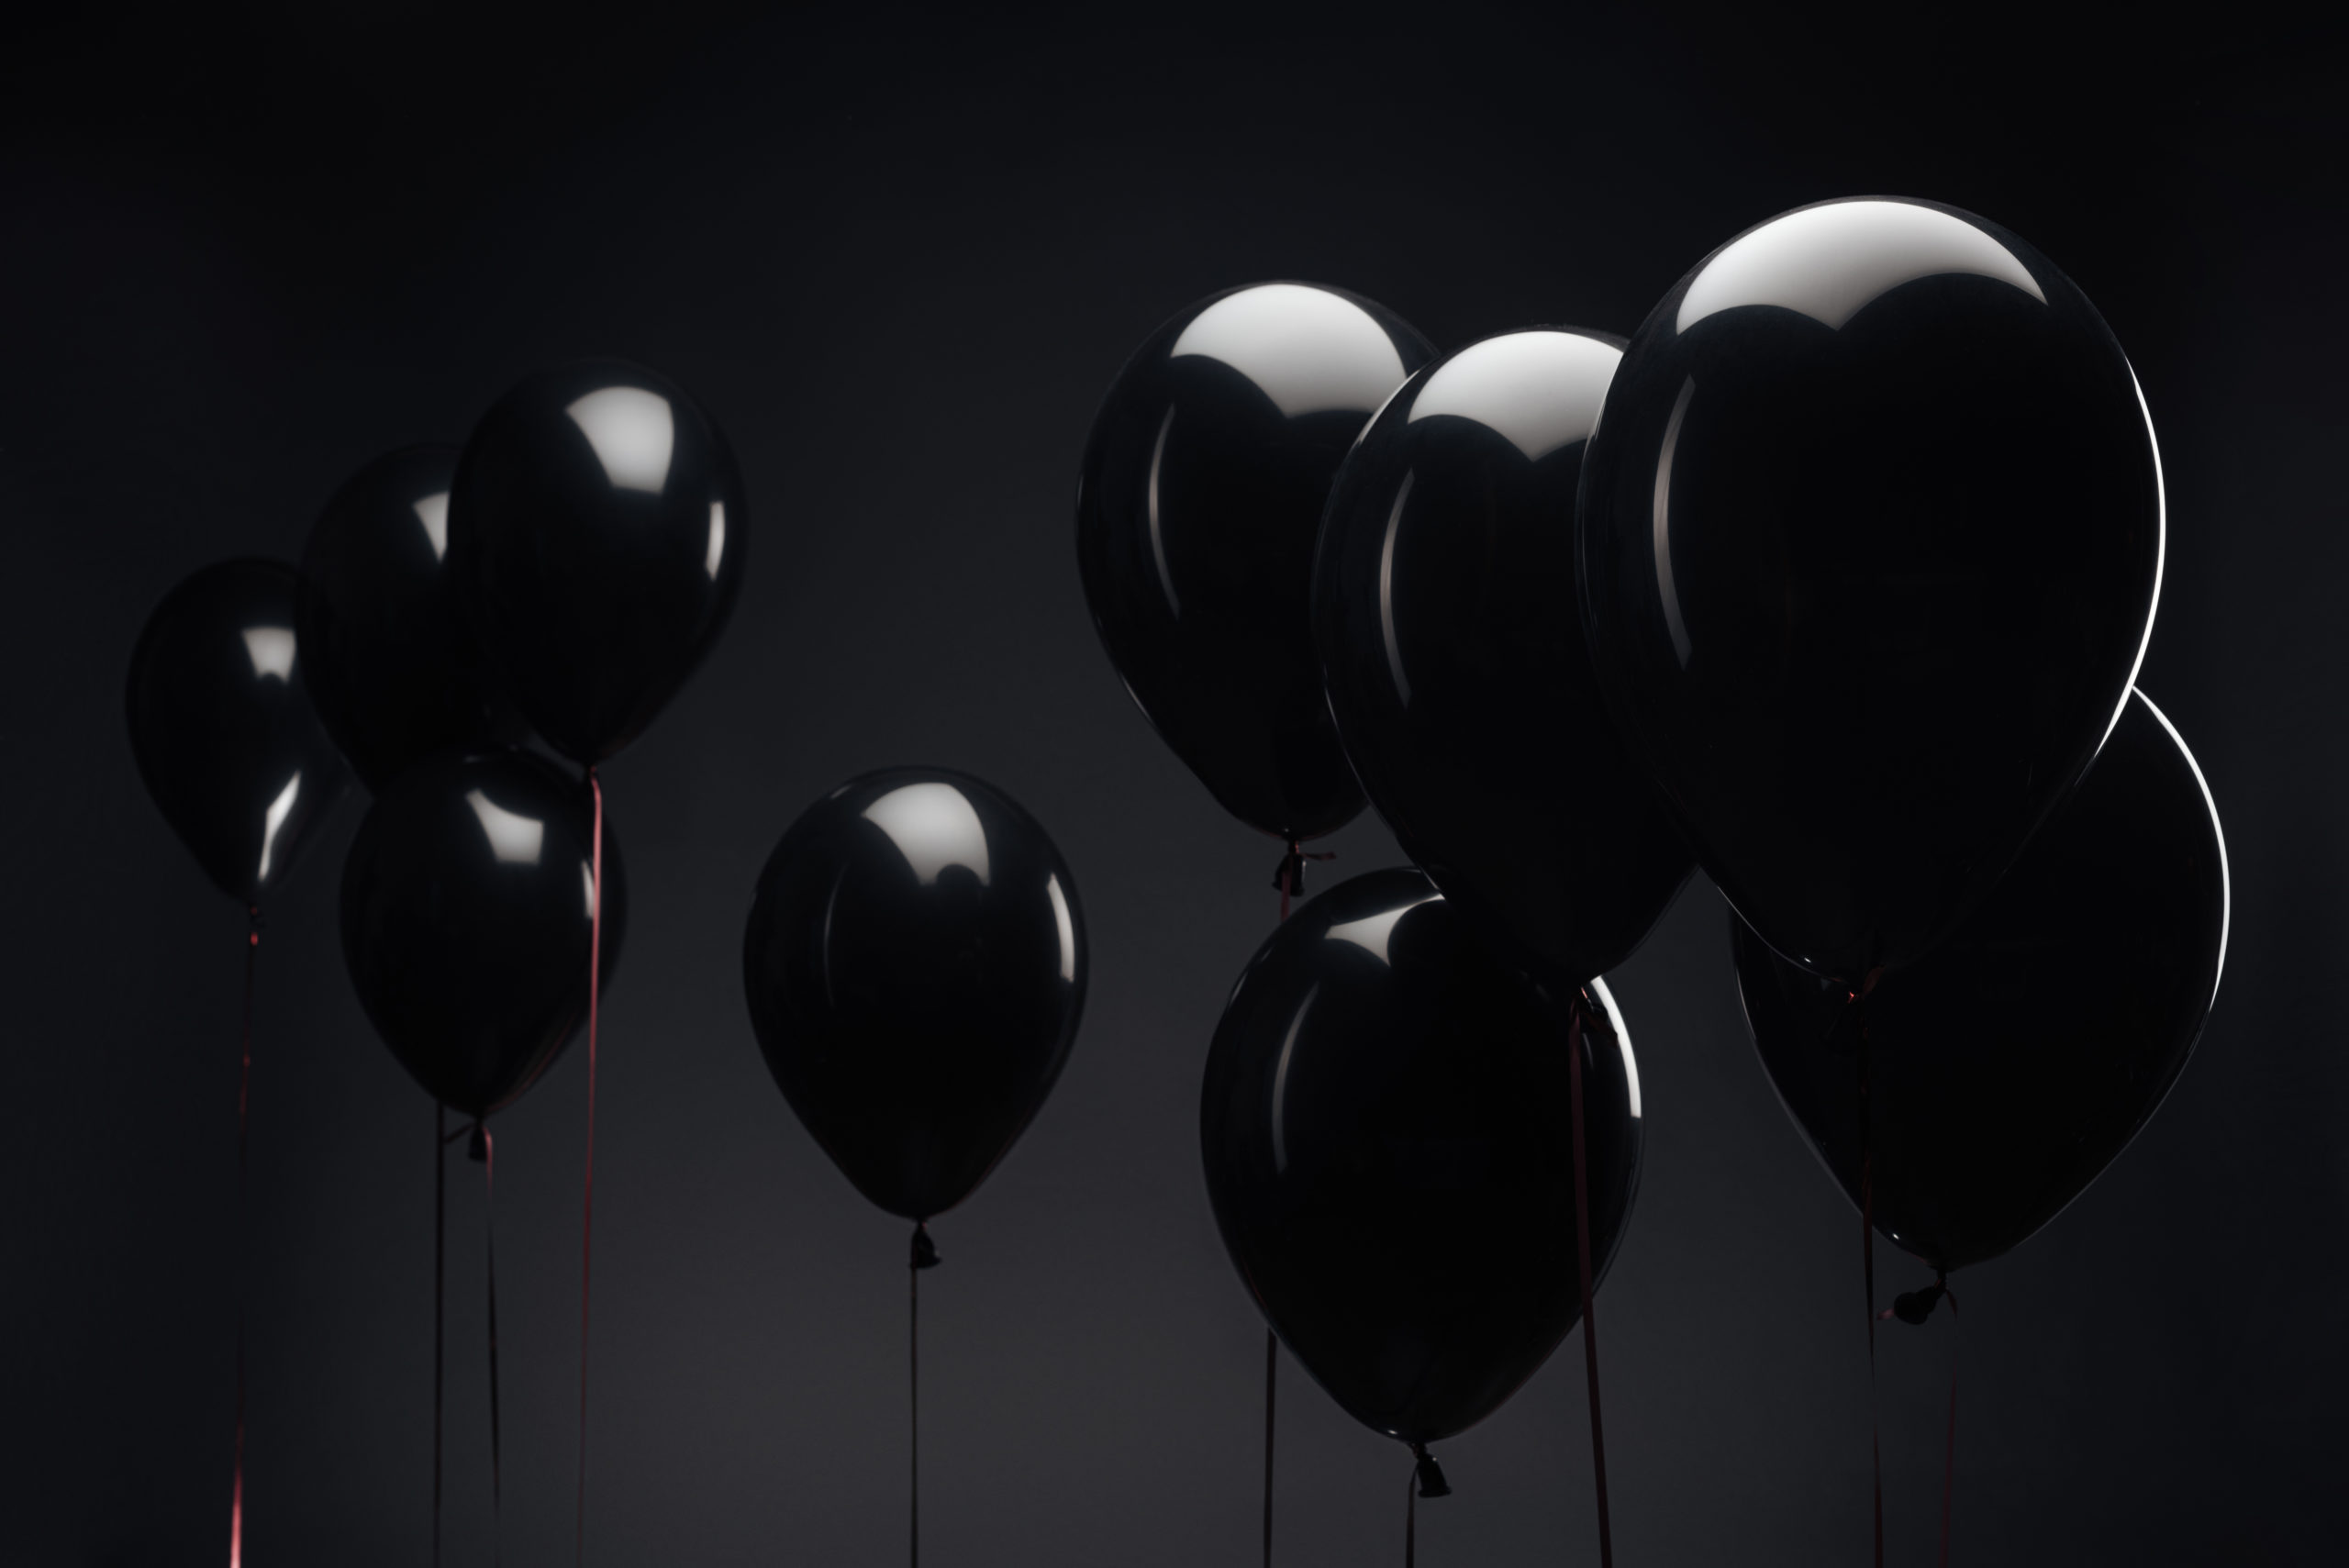 Honoring Black Balloon Day